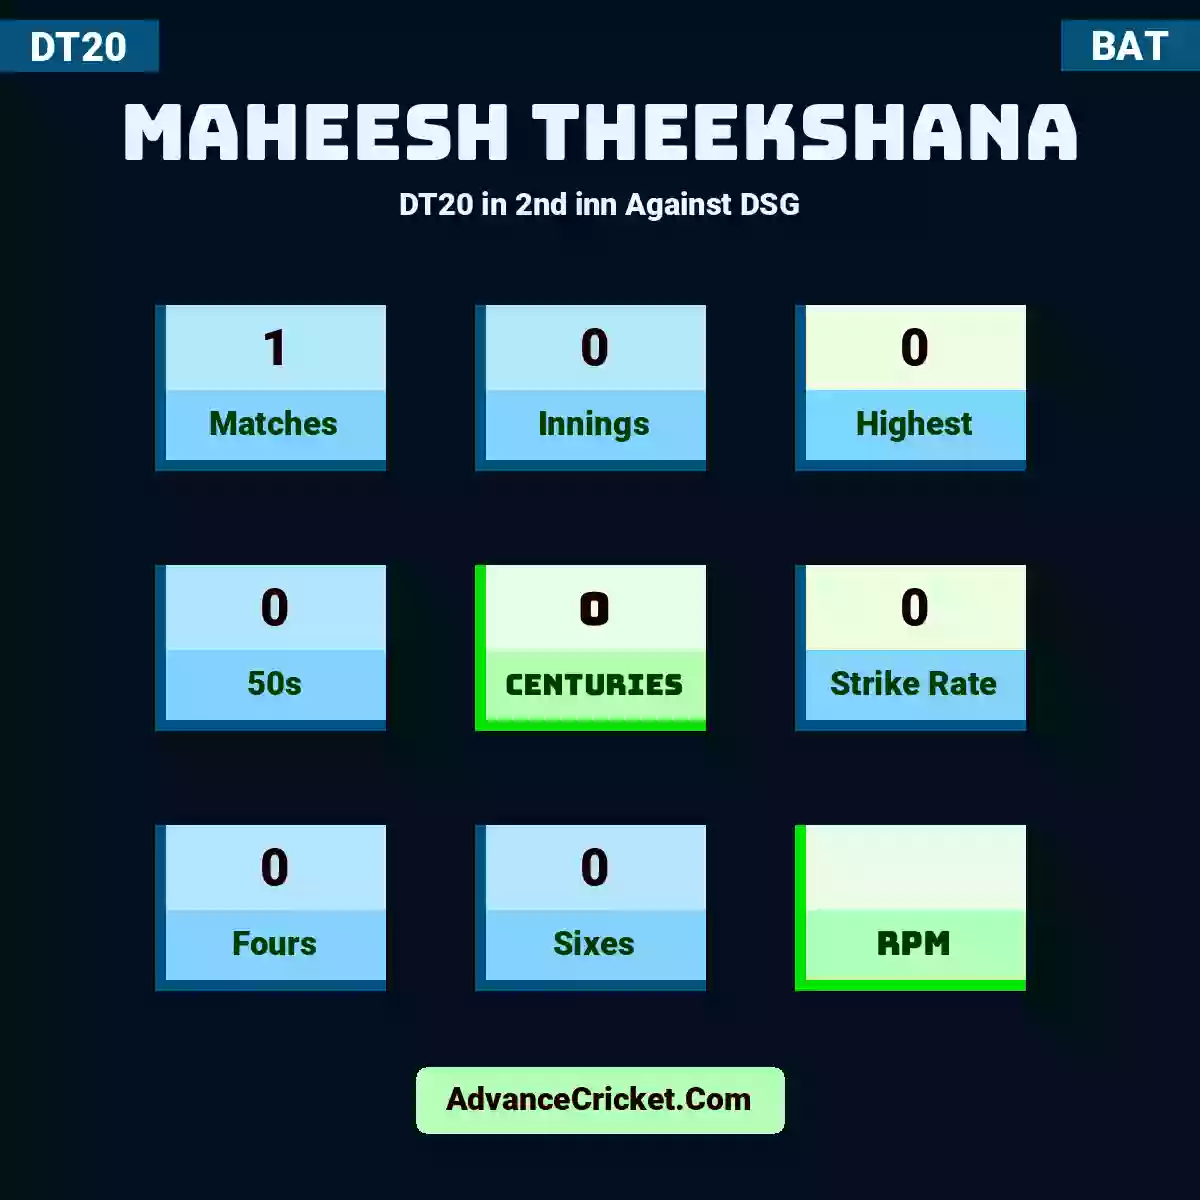 Maheesh Theekshana DT20  in 2nd inn Against DSG, Maheesh Theekshana played 1 matches, scored 0 runs as highest, 0 half-centuries, and 0 centuries, with a strike rate of 0. M.Theekshana hit 0 fours and 0 sixes.